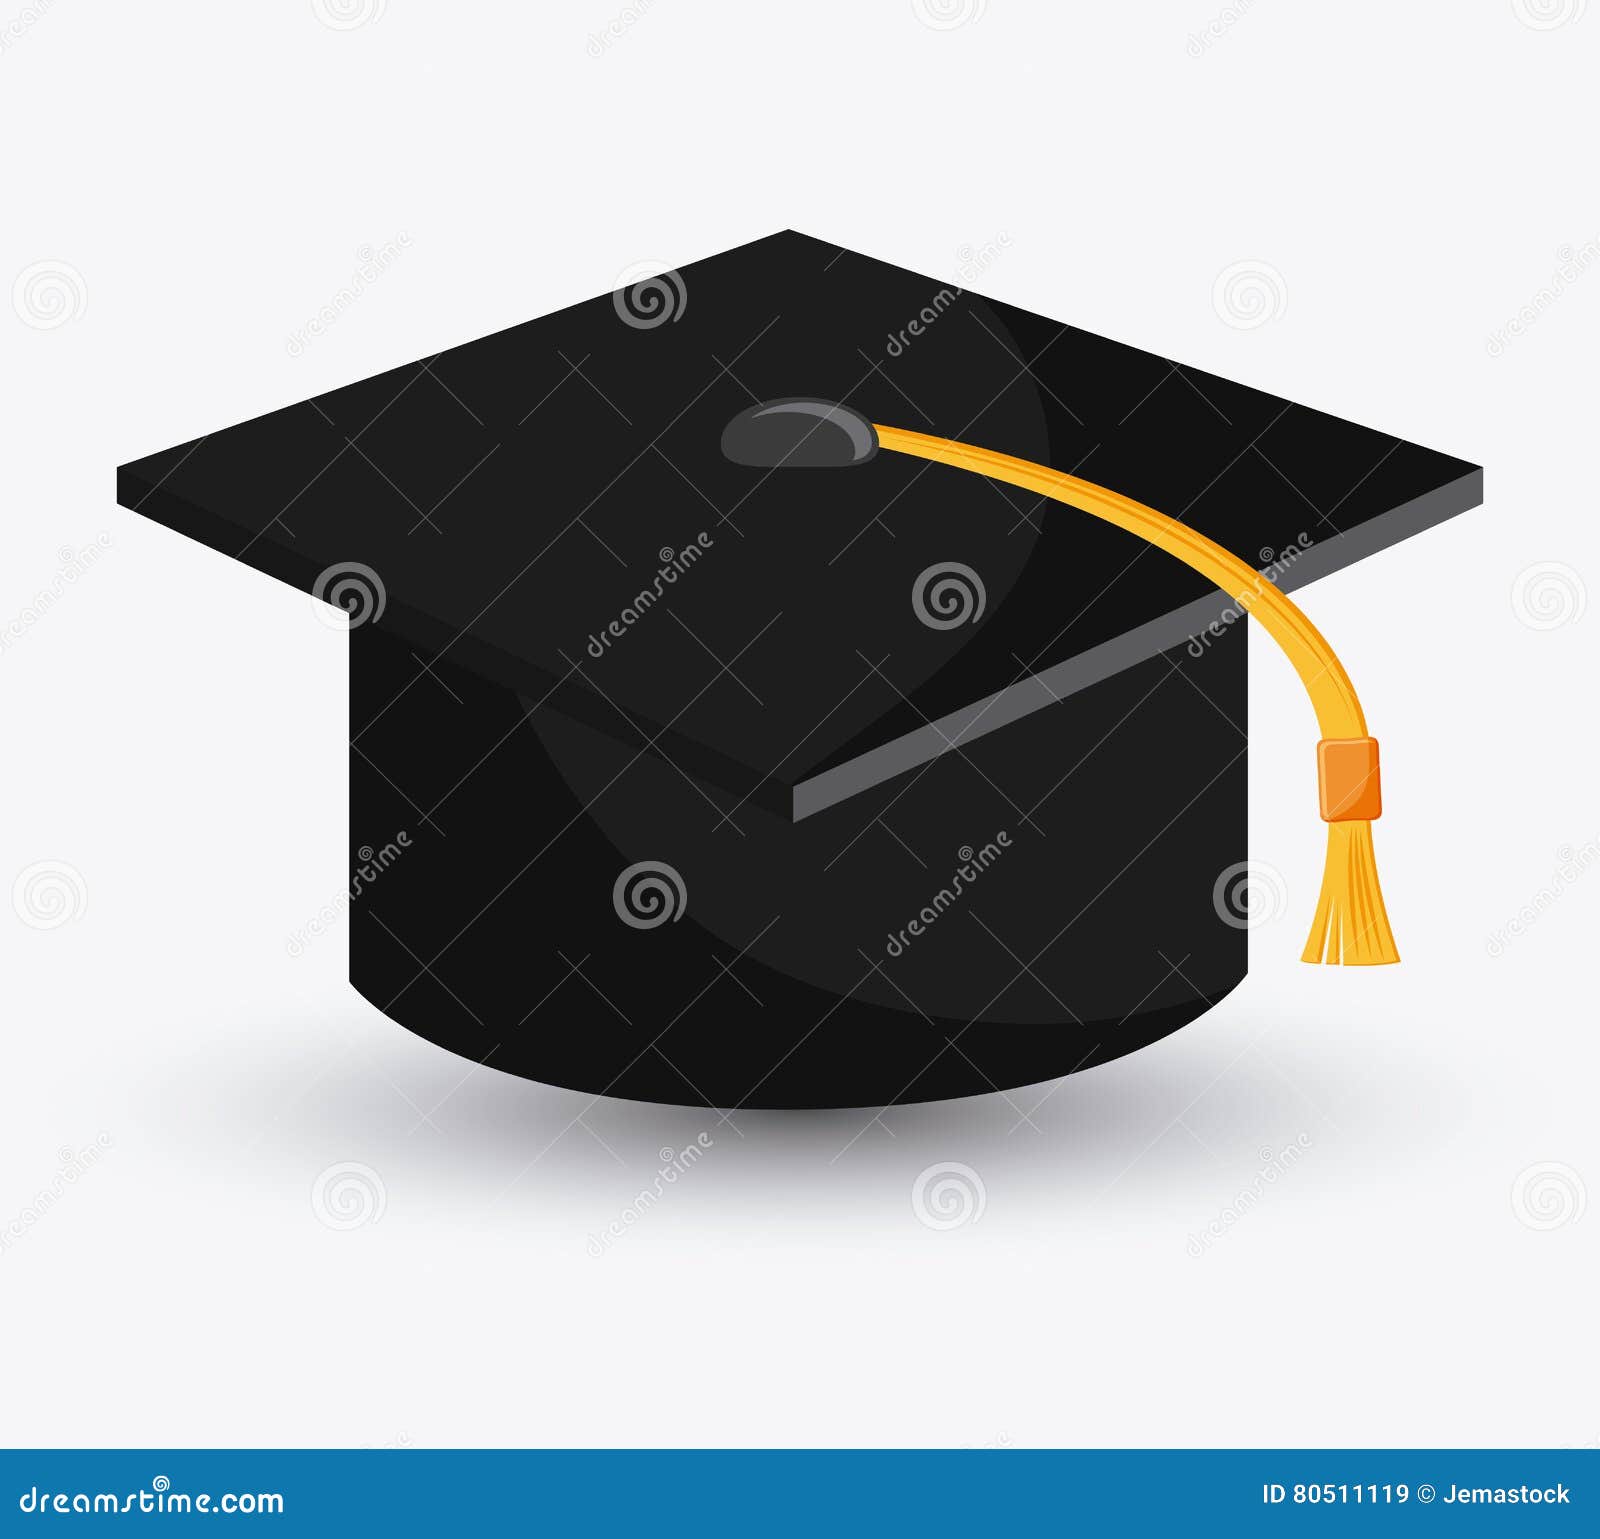 Graduation Cap Cloth Design Stock Vector - Illustration of accessory ...